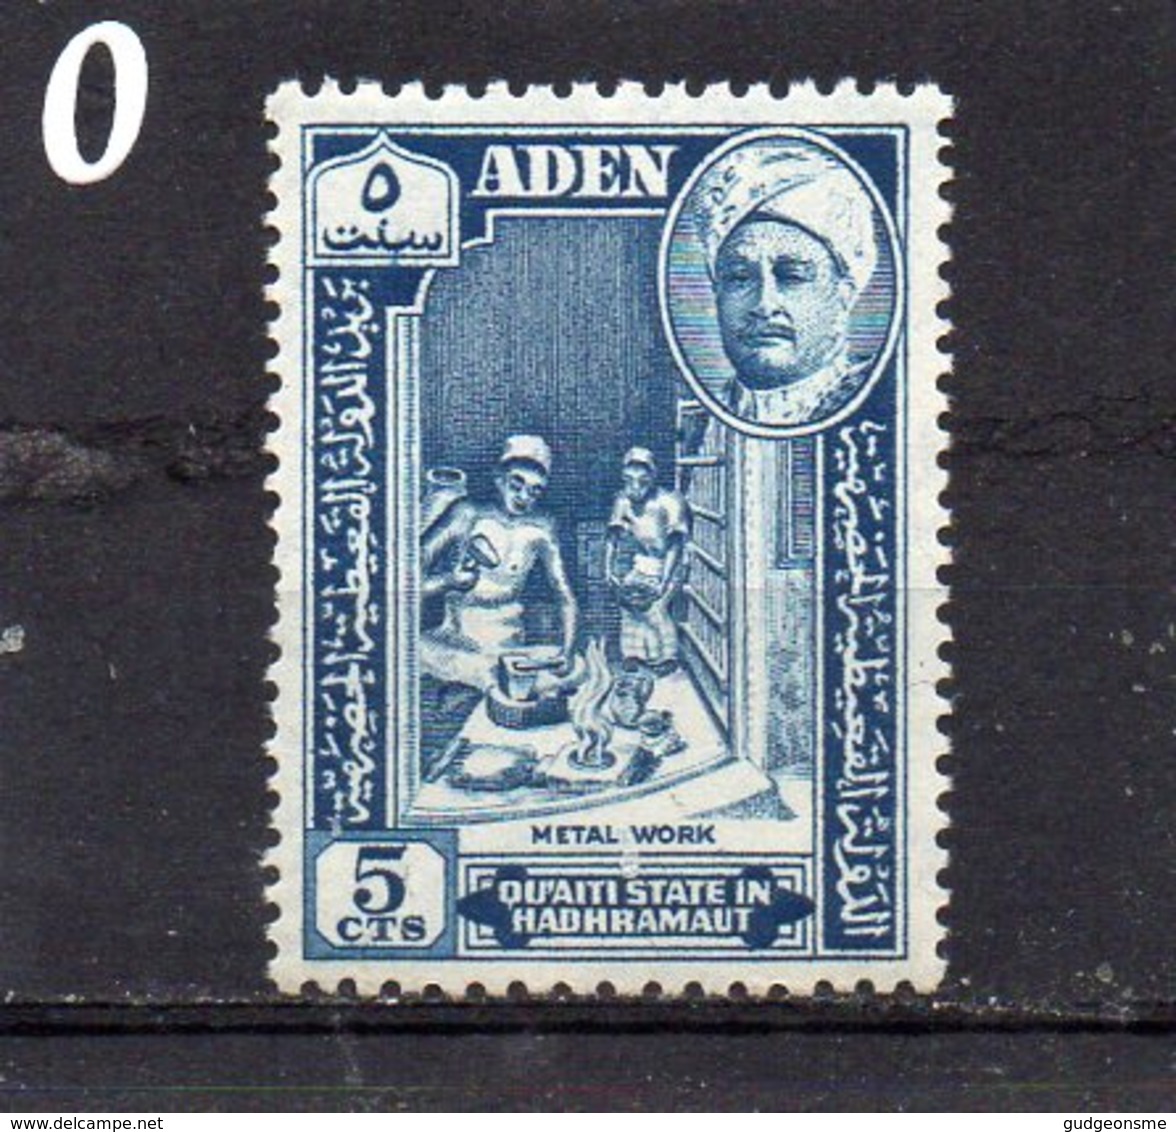 QU'AITI STATE IN HADHRAMAUT 1955 5c MNH - Aden (1854-1963)